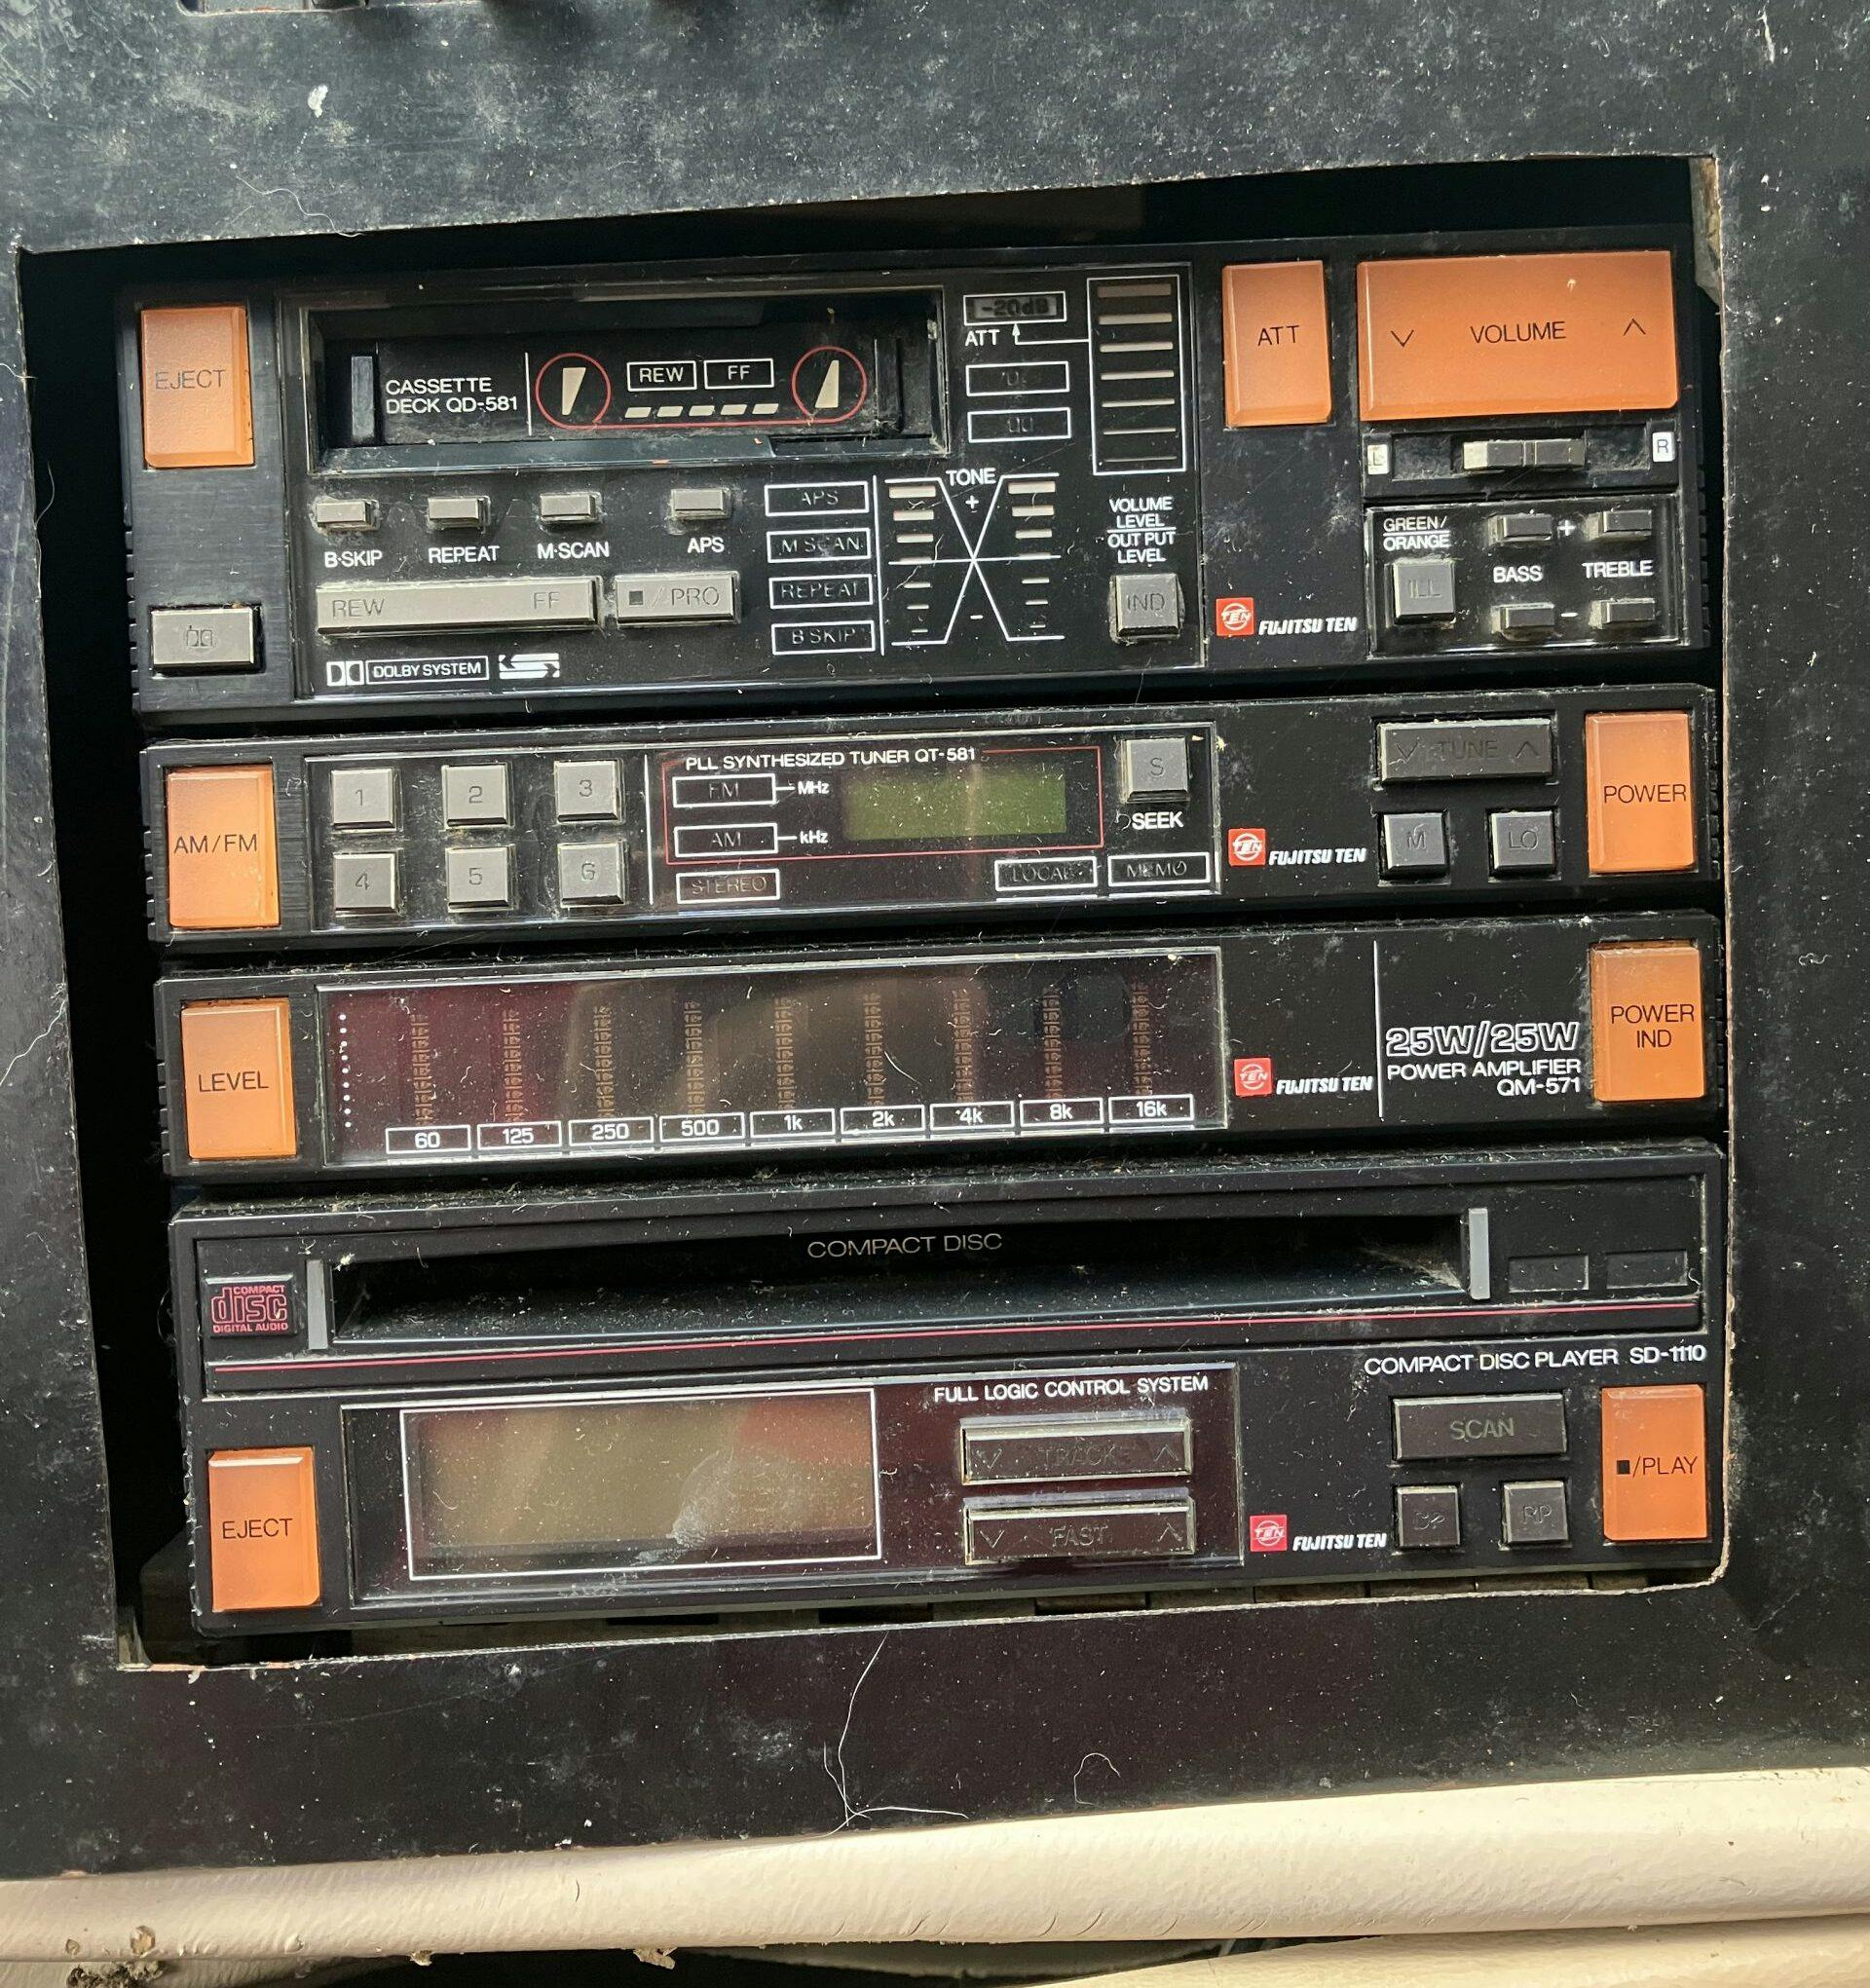 1987 EMC Eldorado Starfire RV interior radio